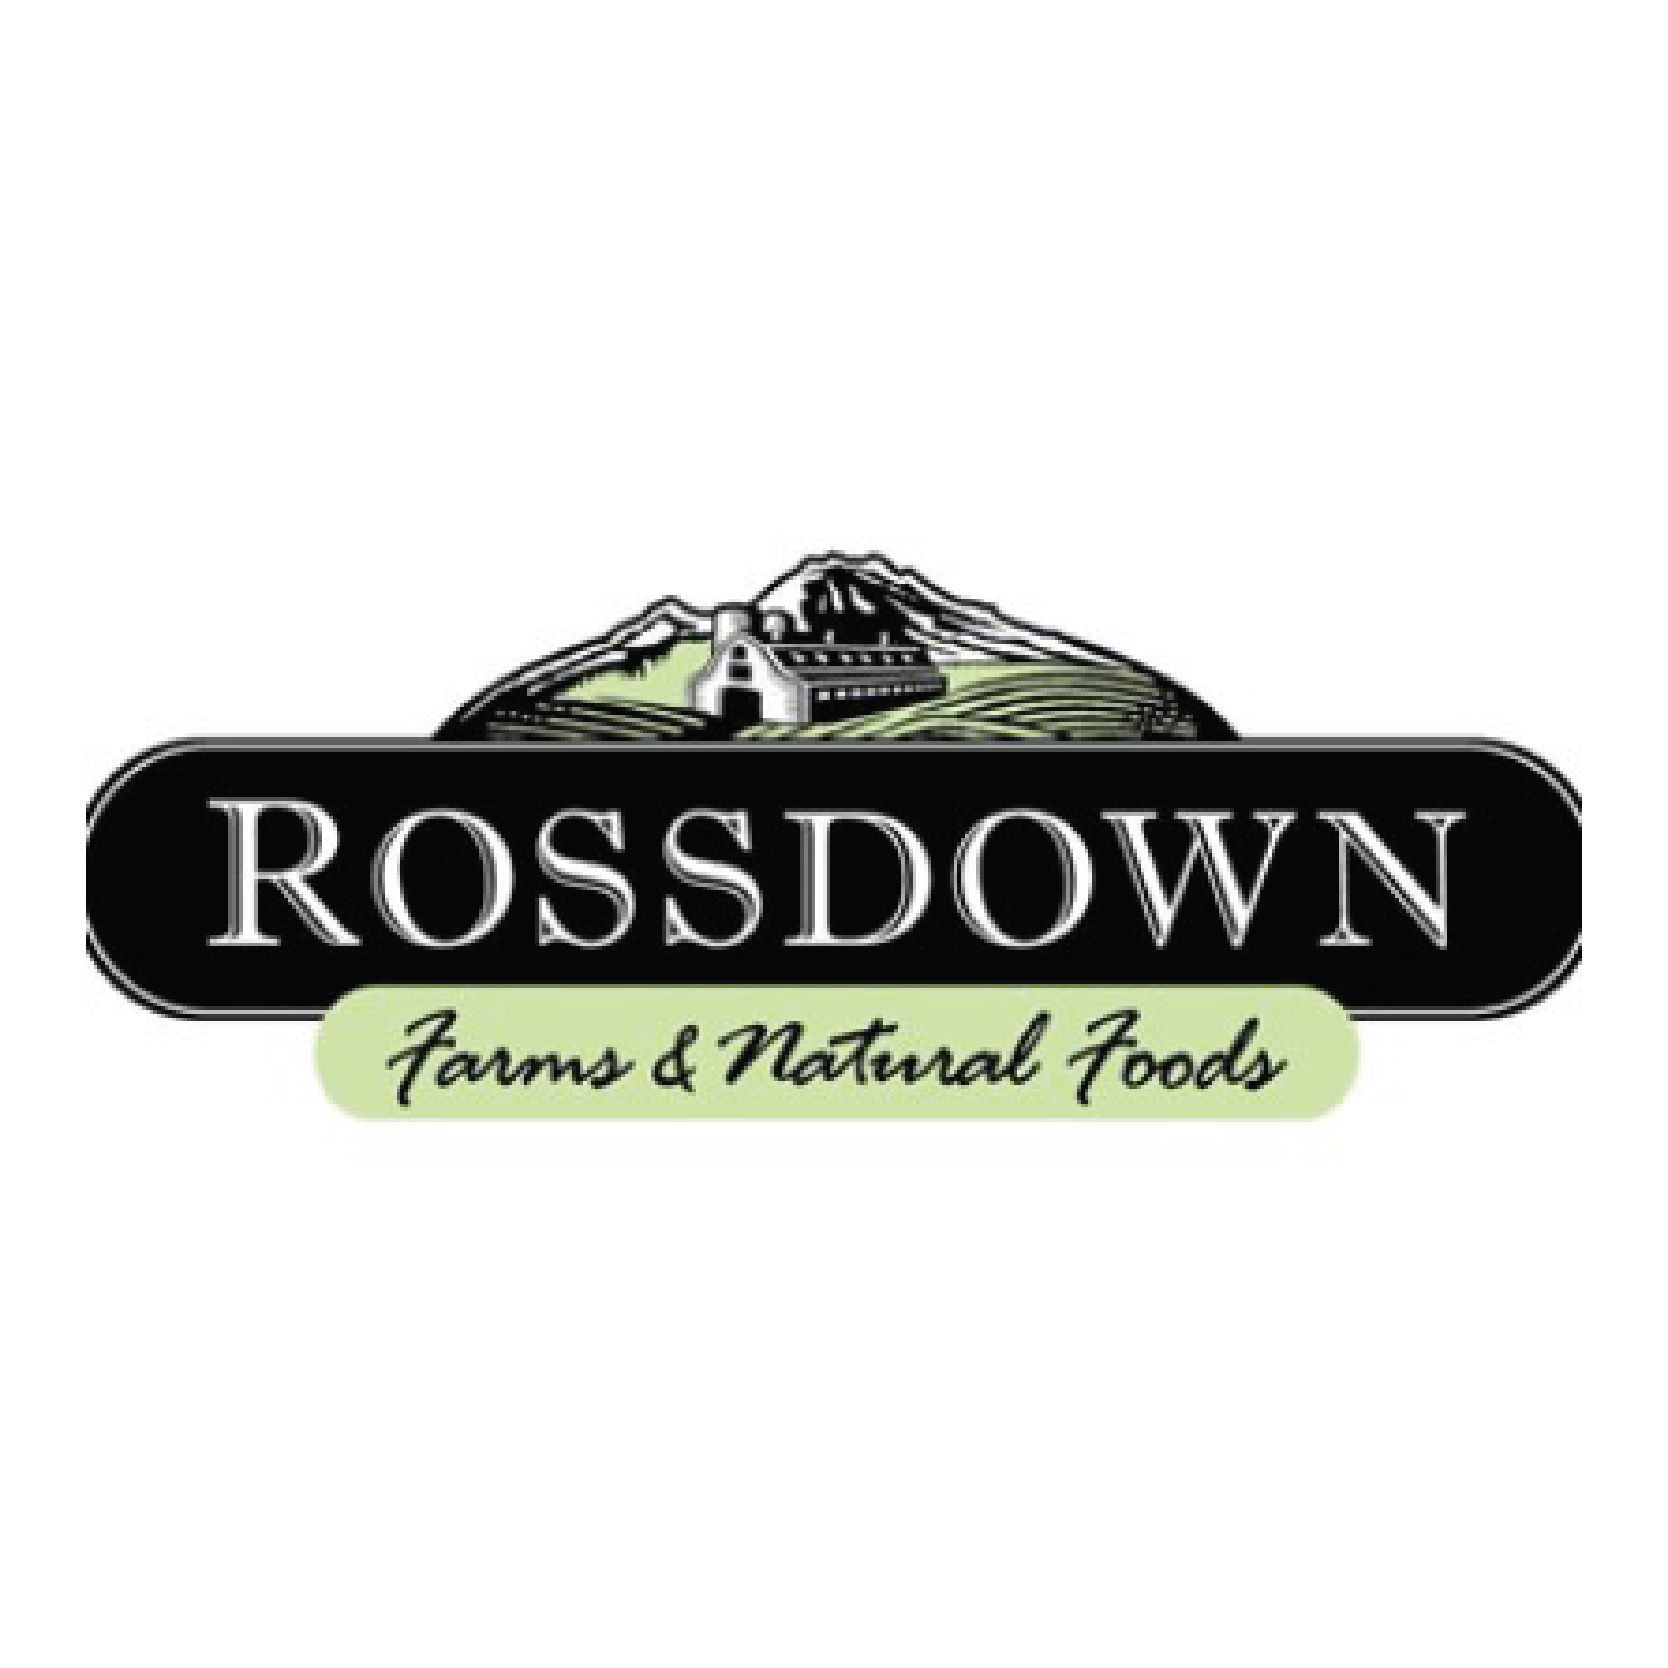 Ross Down